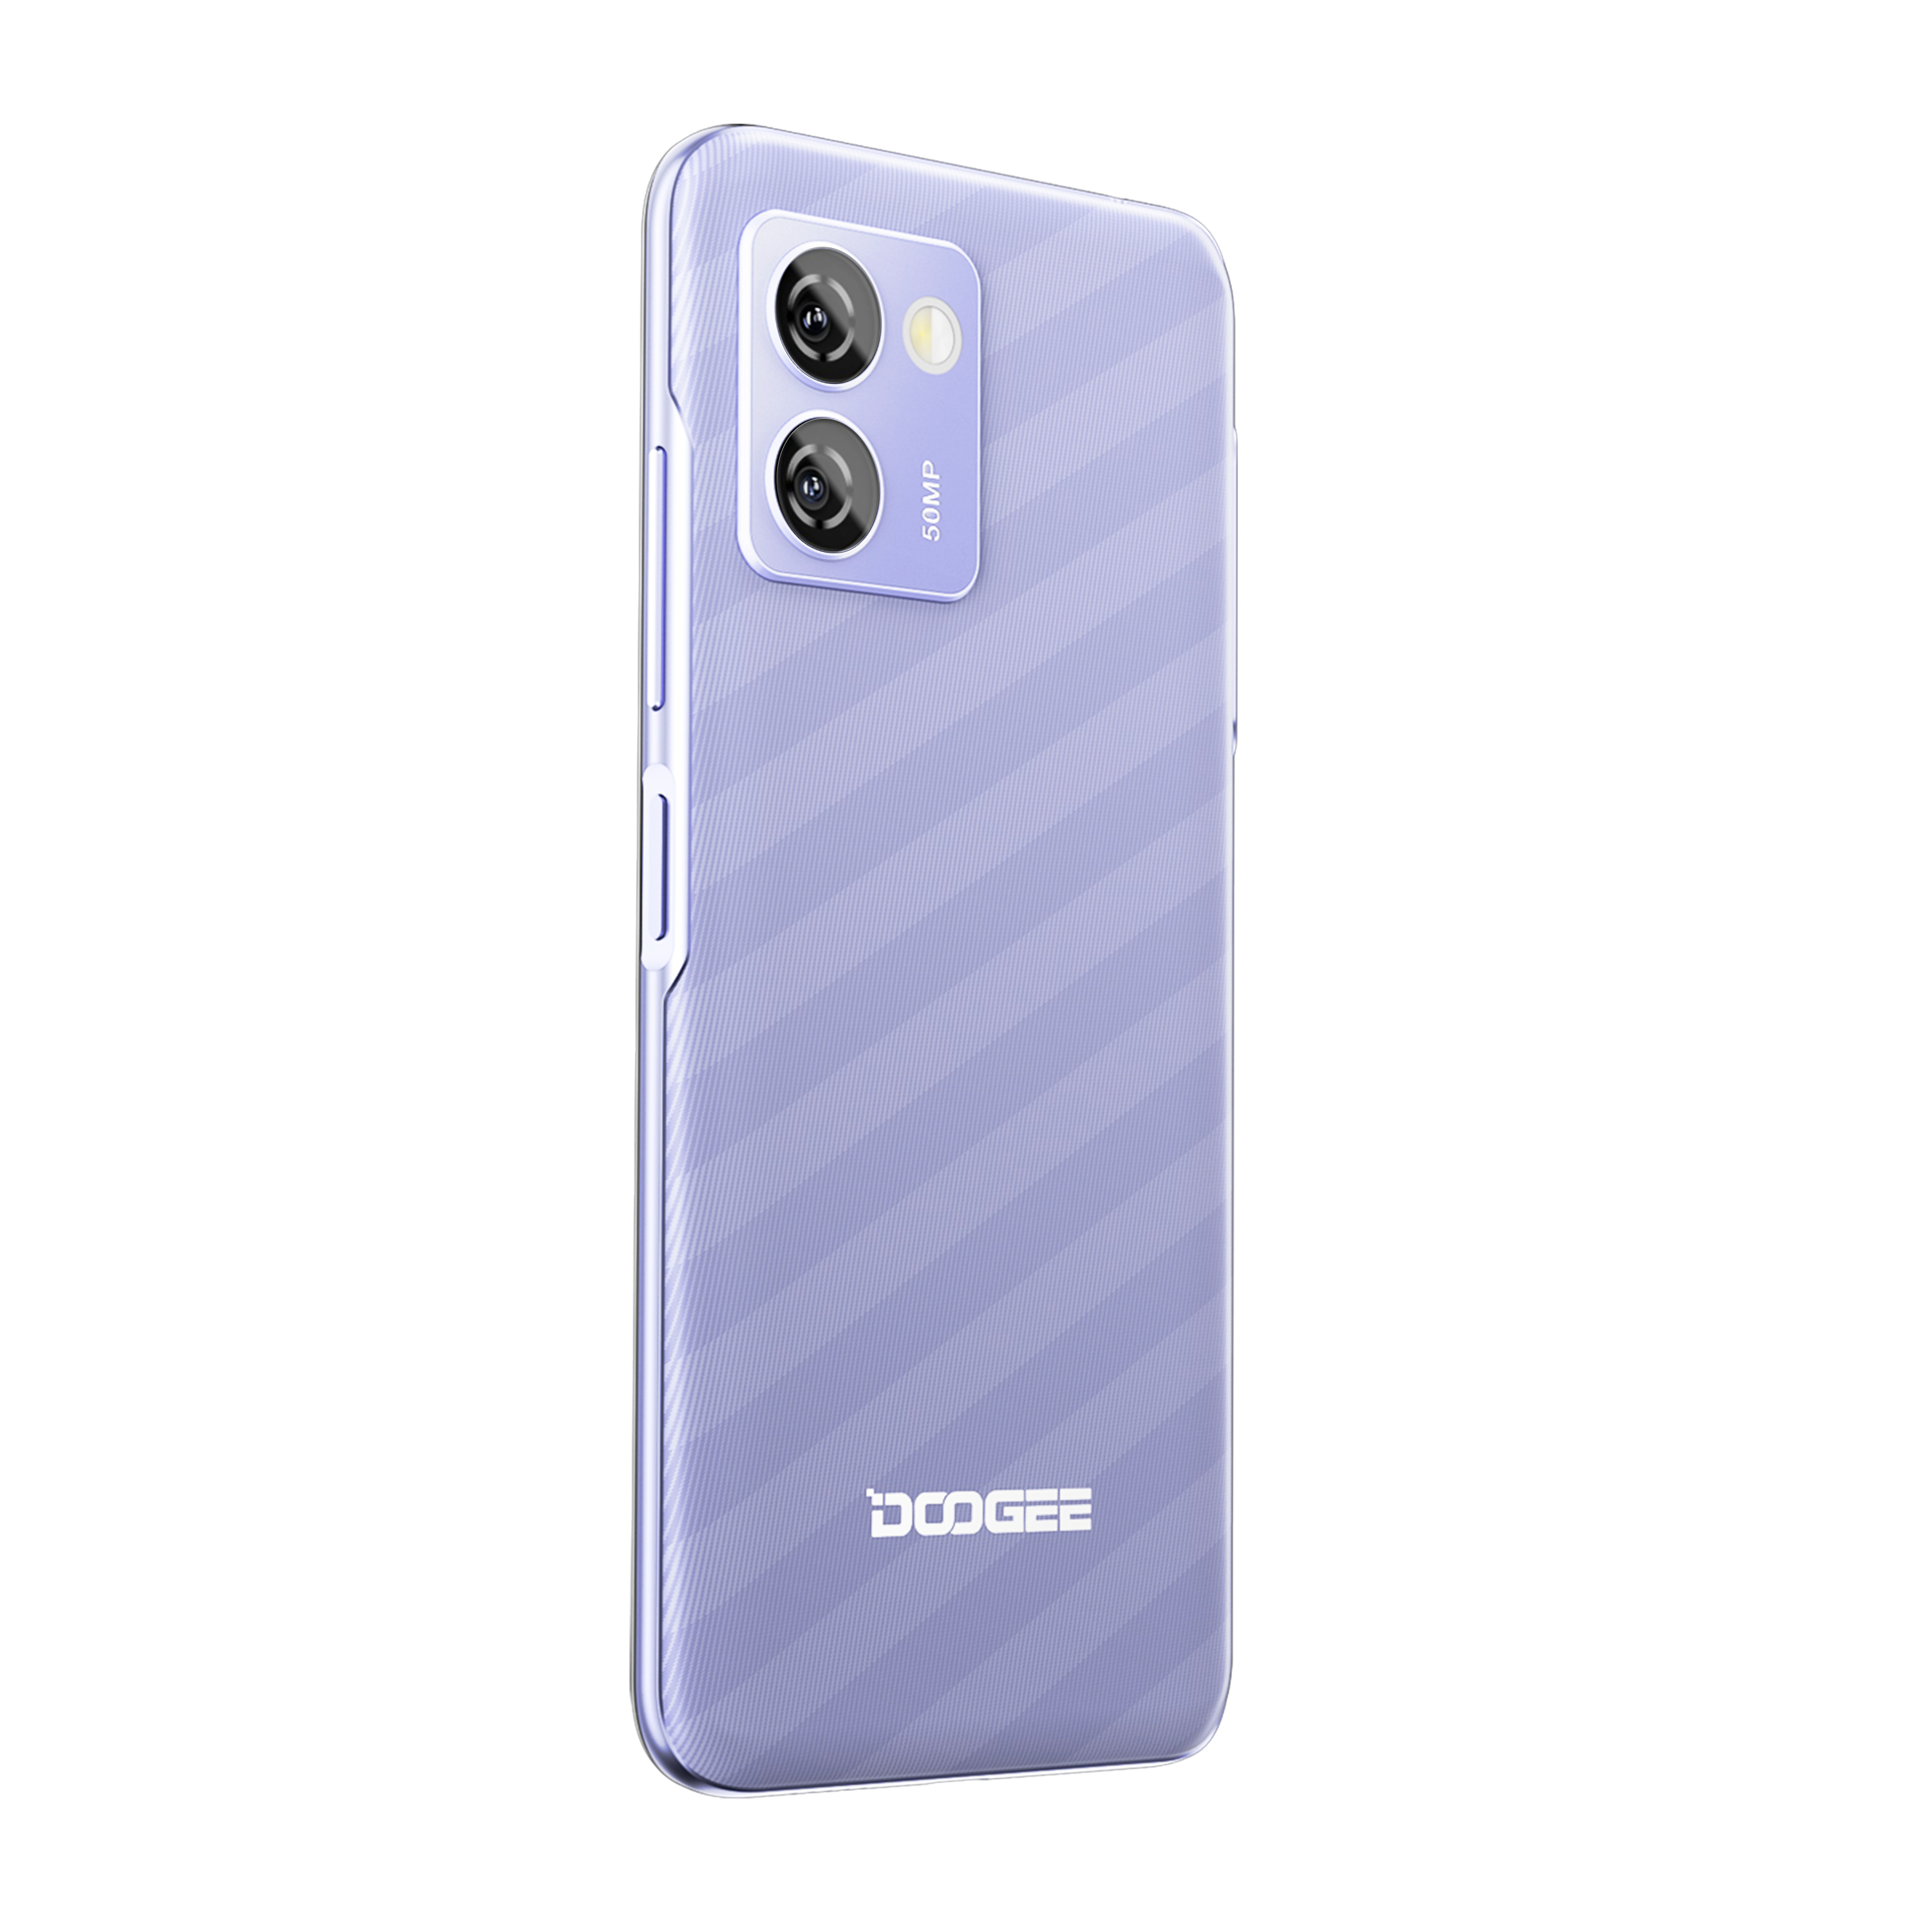 DOODEE N50 Pro Smart Phone